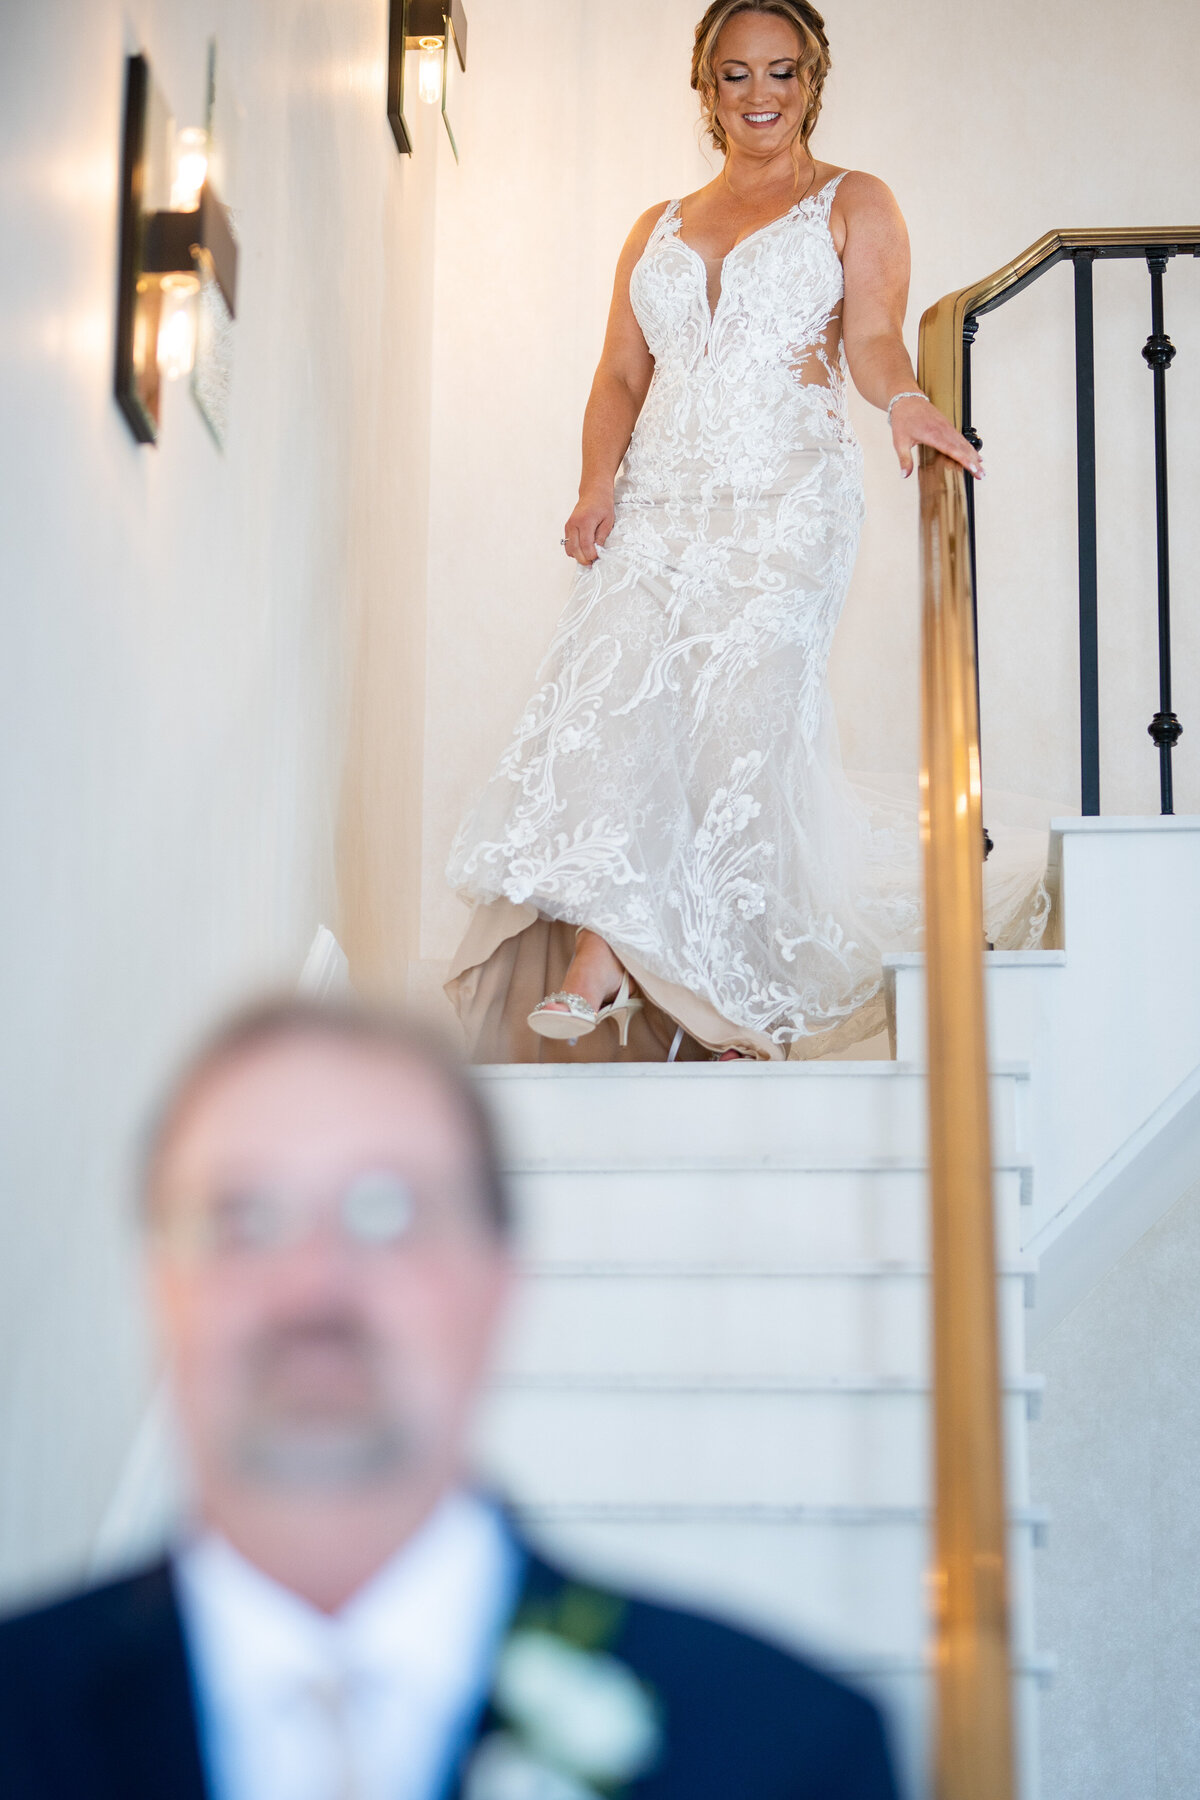 19Intercontinental-Chicago-Hotel-Wedding-Photos-Lauren-Ashlely-Studios